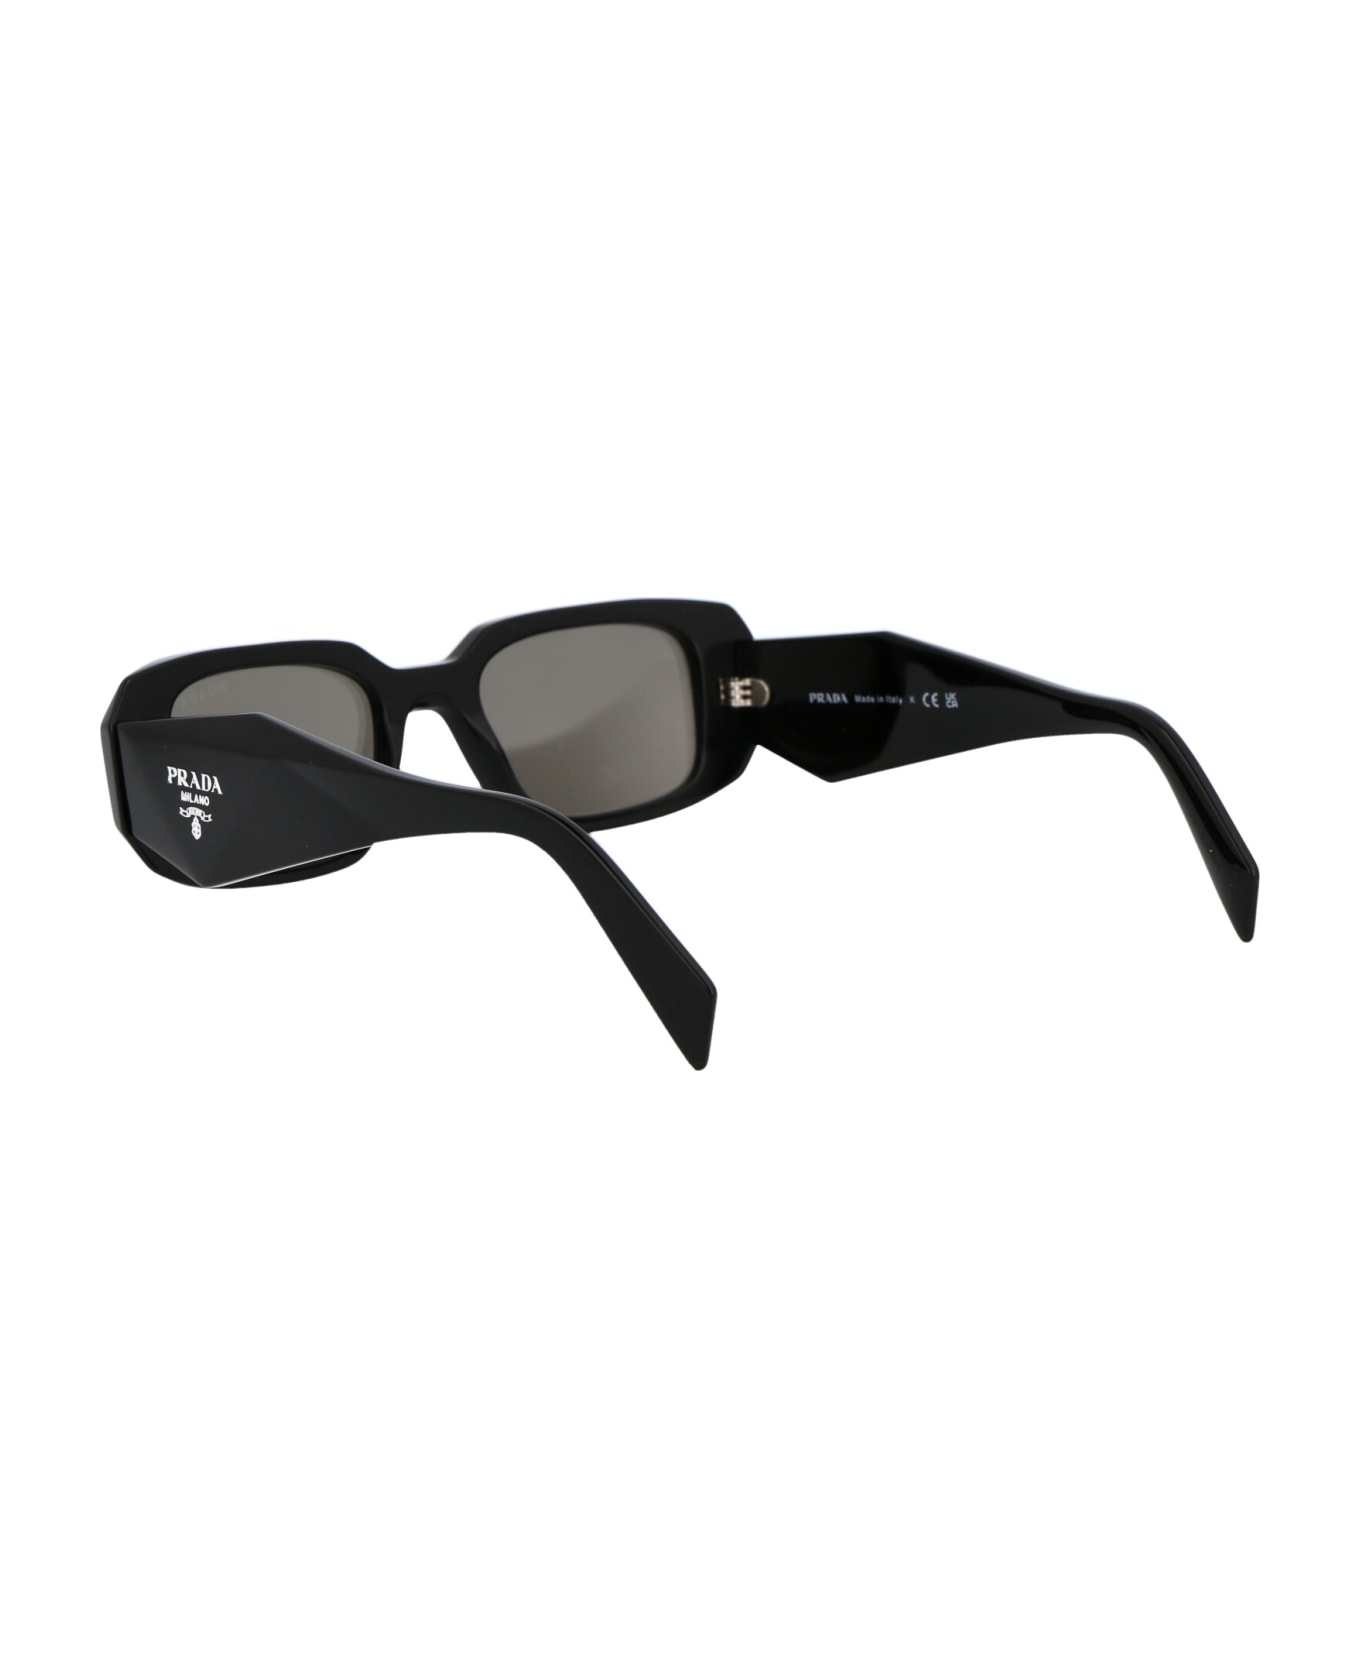 Prada Eyewear 0pr 17ws Sunglasses - 1AB2B0 BLACK